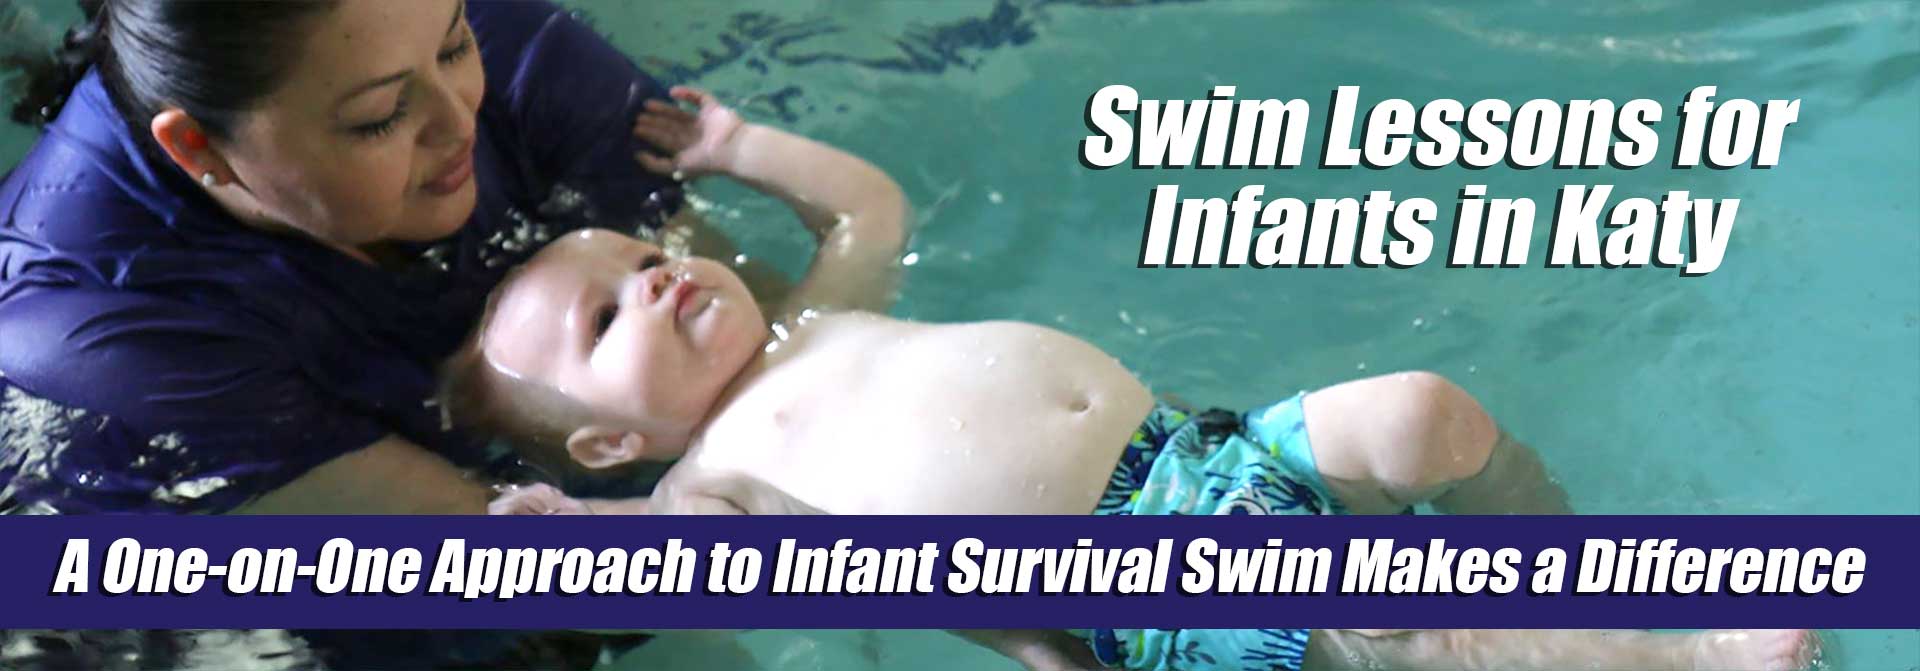 Swim Lessons for Infants in Katy